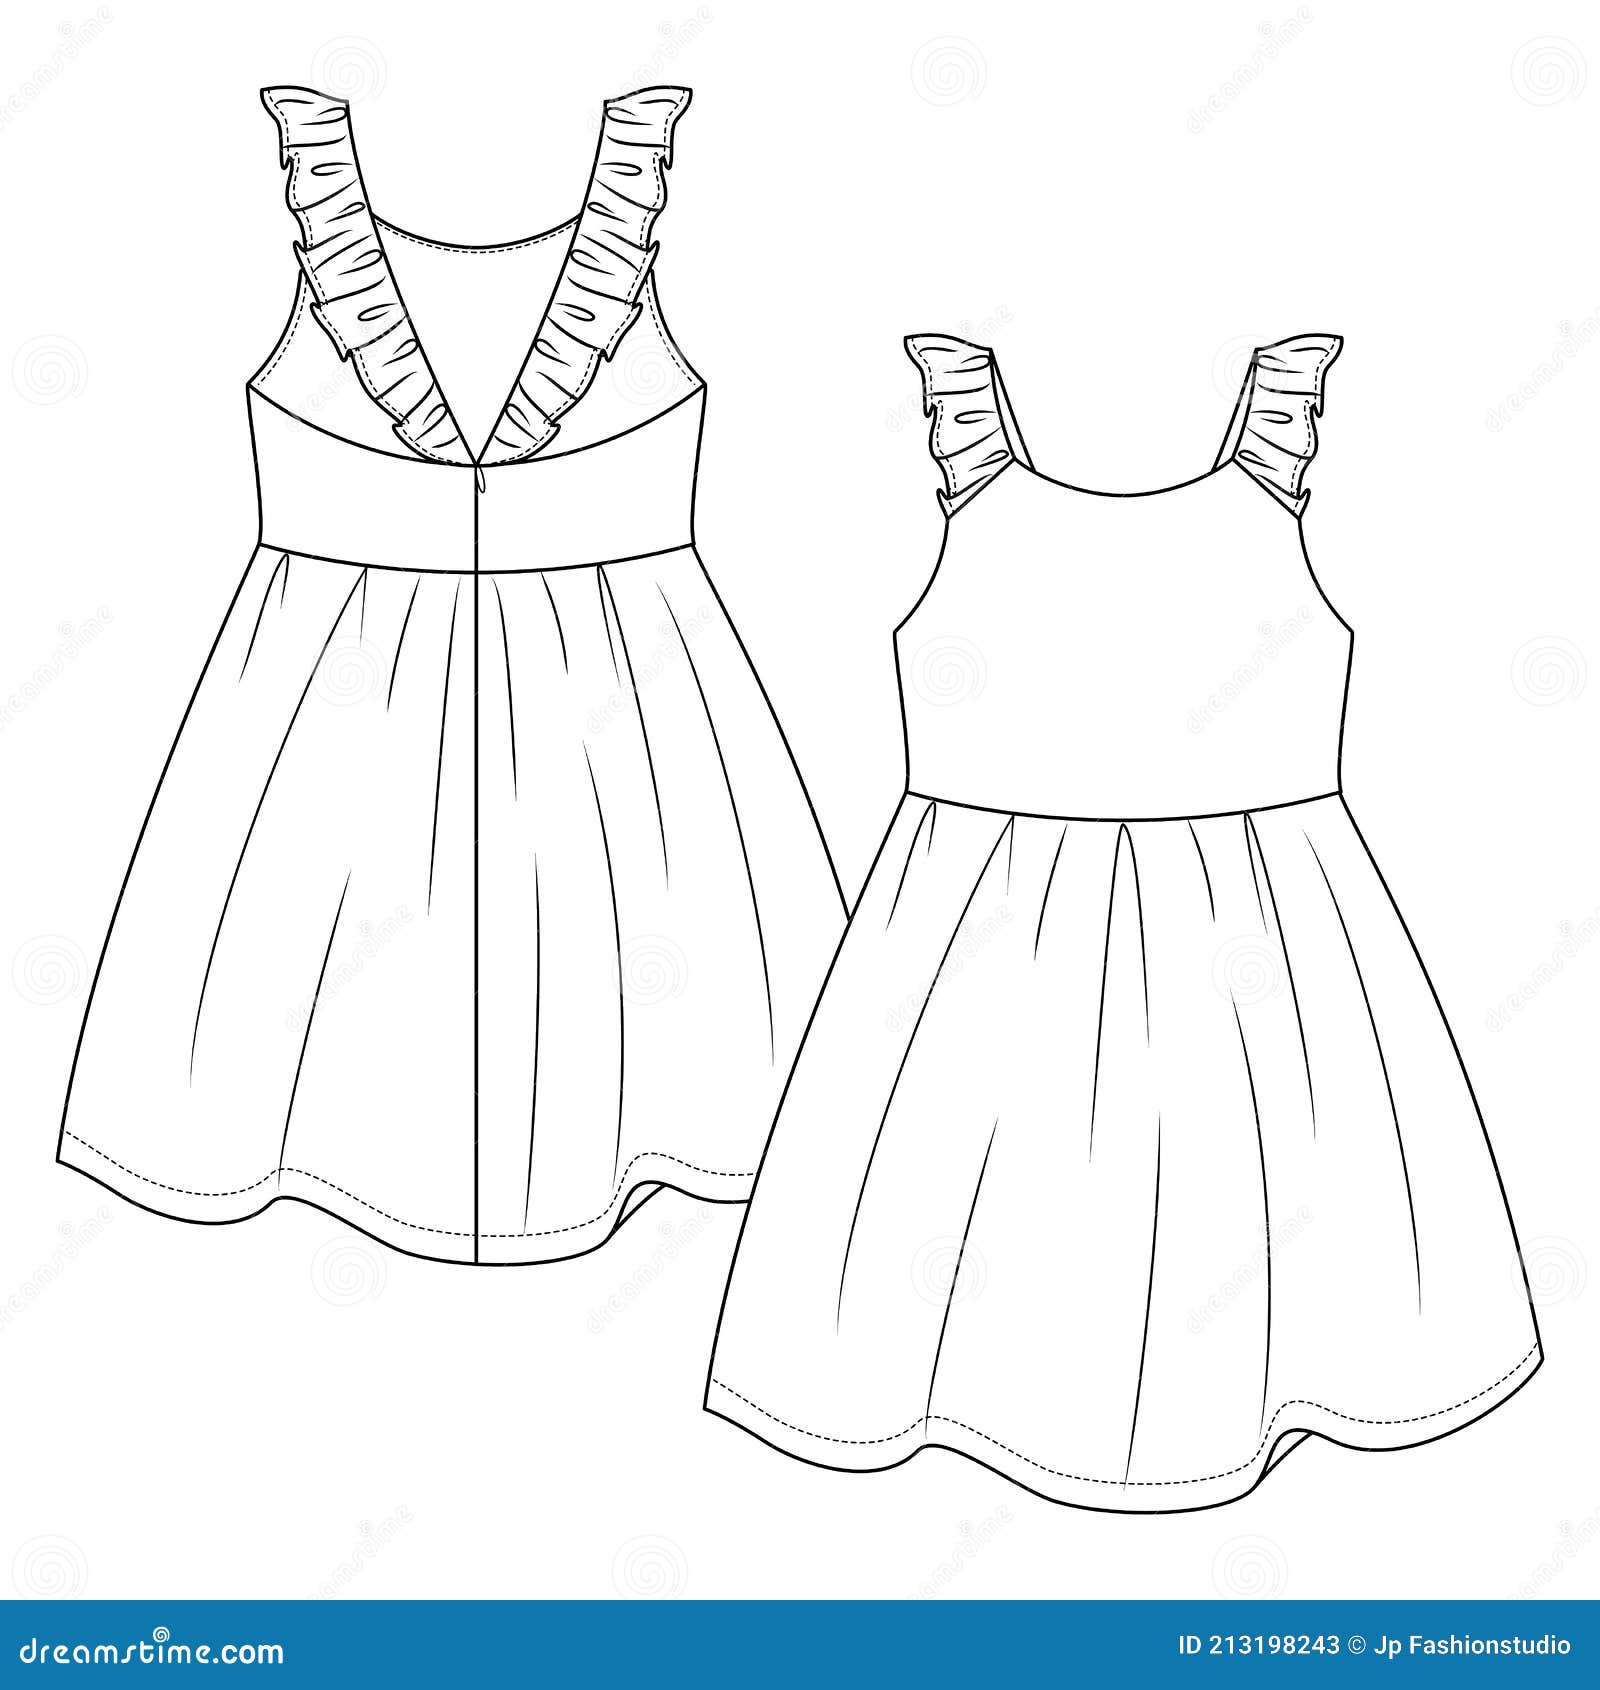 https://thumbs.dreamstime.com/z/baby-girls-dress-213198243.jpg